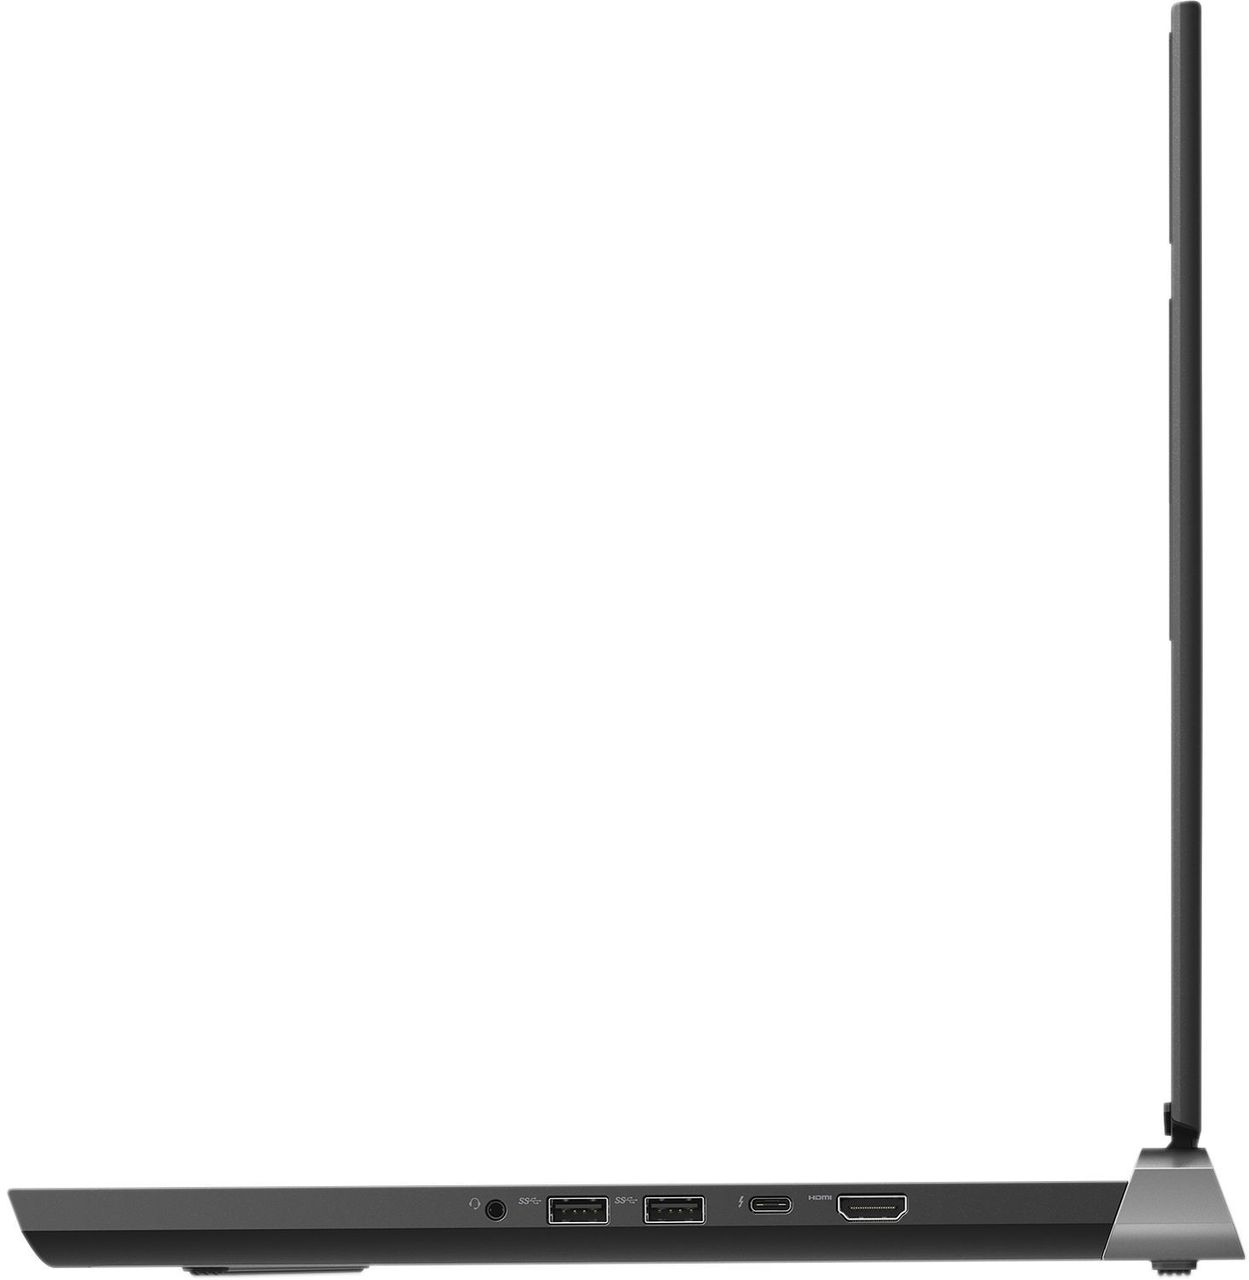 Ноутбук Dell G5 15 5587 G515-7374